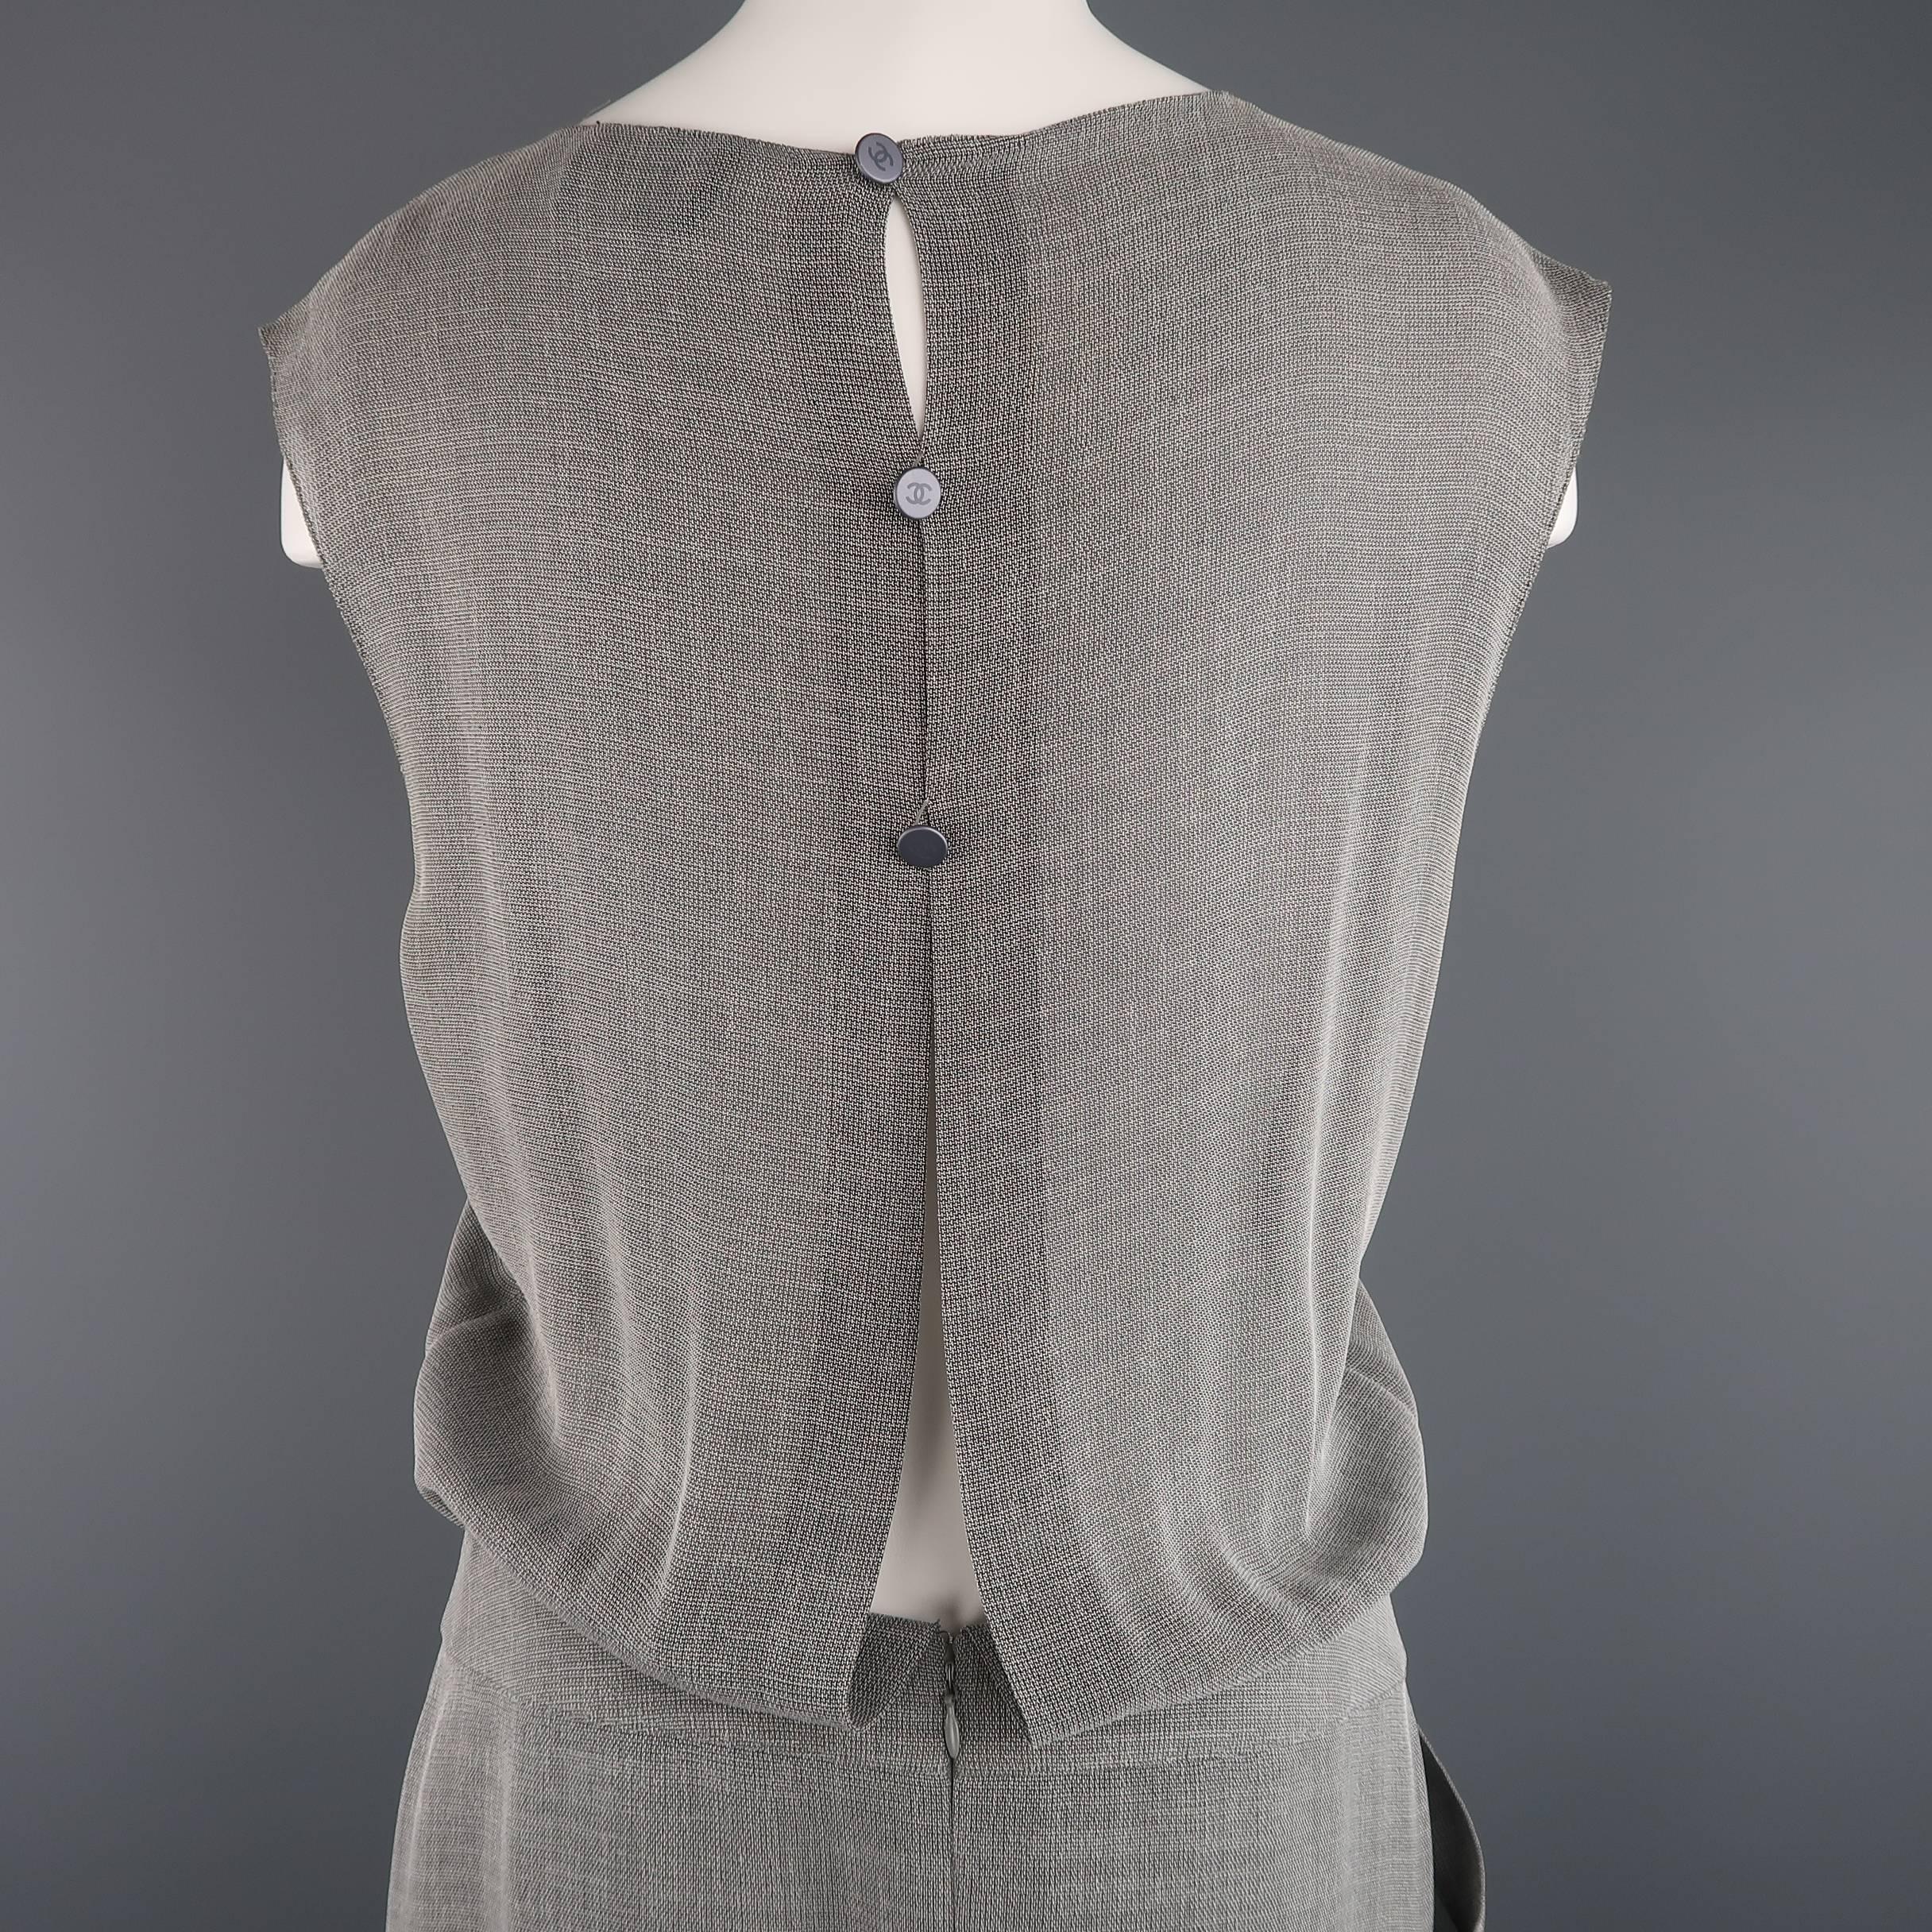 Vintage CHANEL Dress - Medium -  SS 1999 Grey Knit Drop Drape Skirt Shift Dress 2